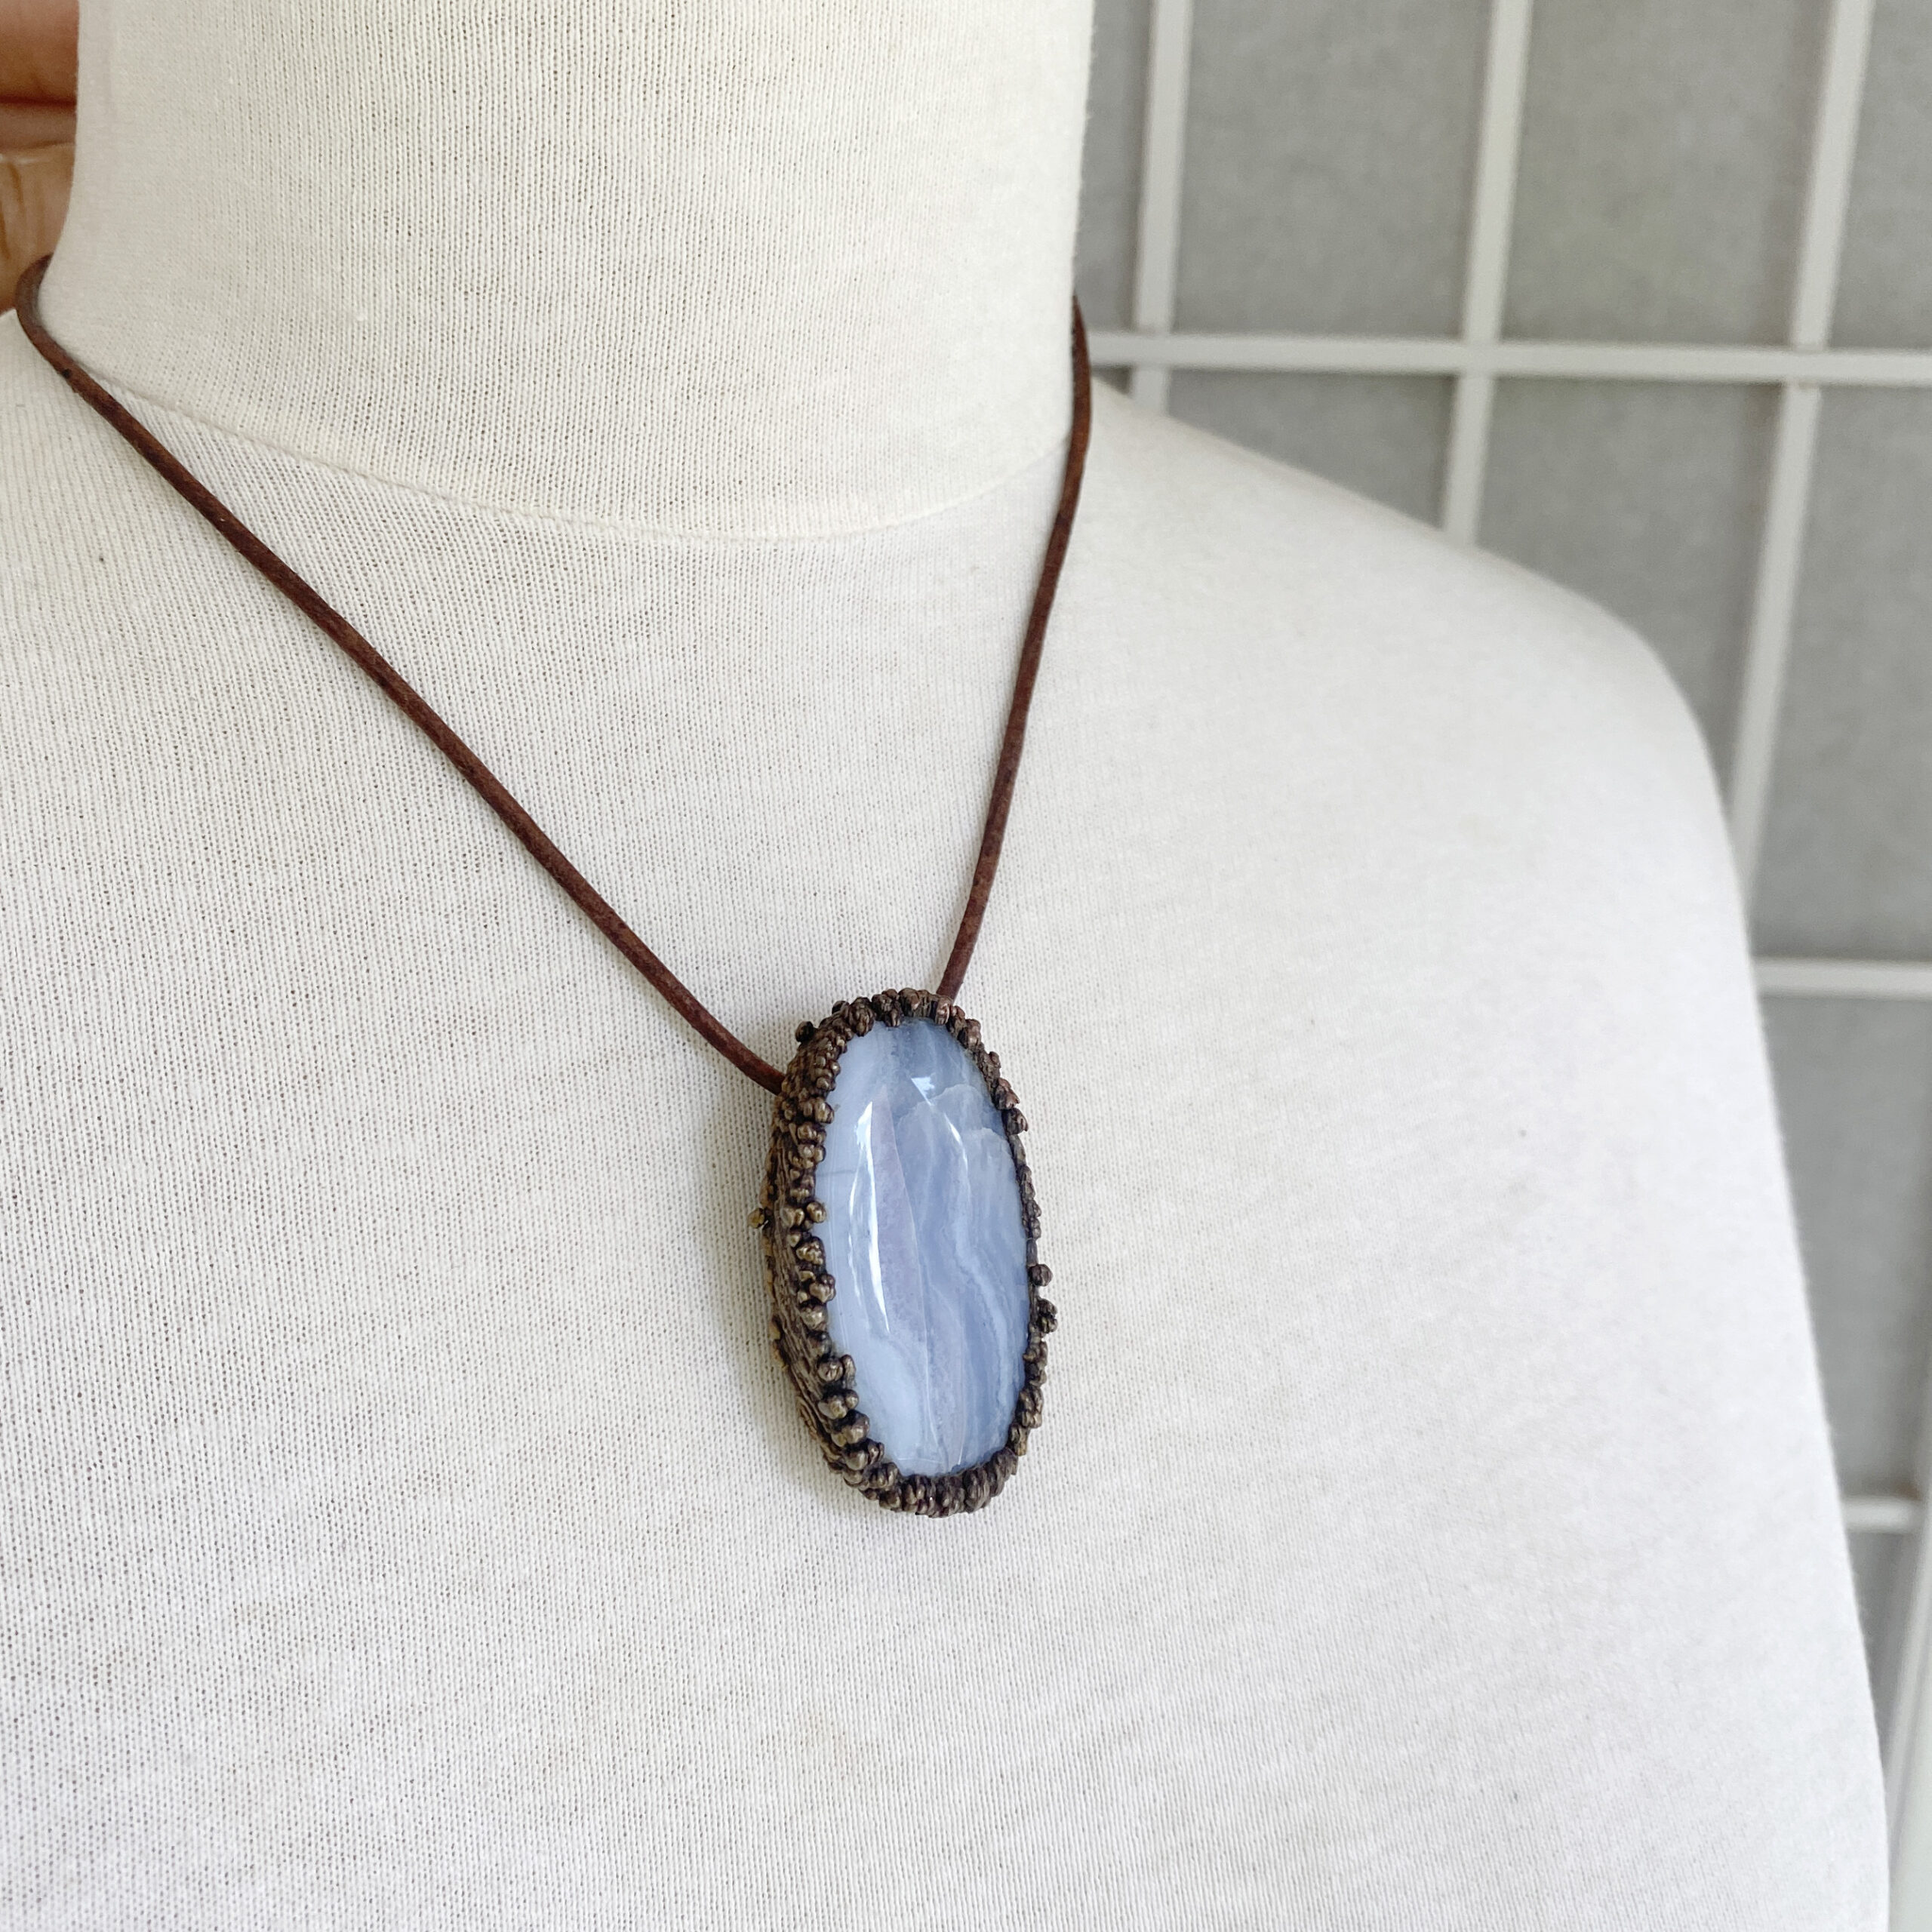 Lei 'Ohana Necklace - Blue Lace Agate